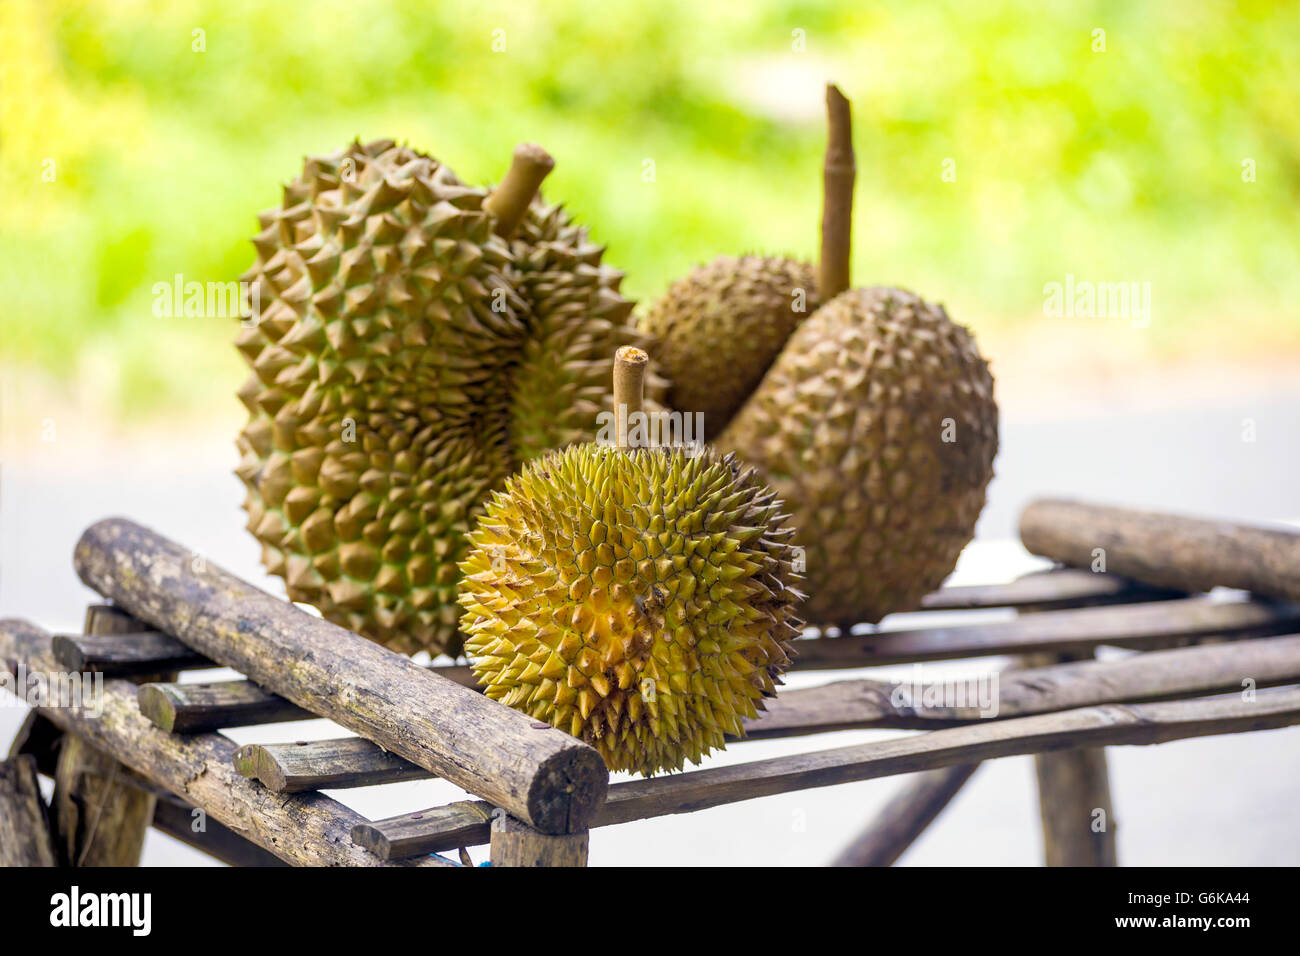 Durian am Marktstand Stockfoto